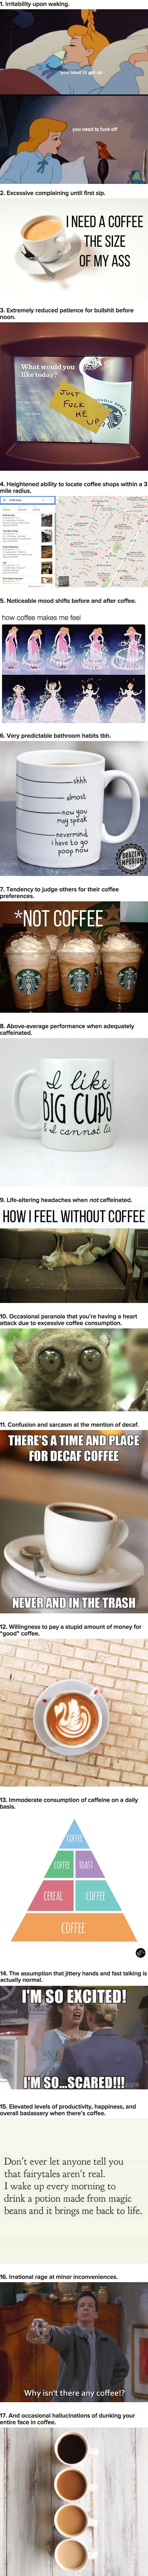 Symptoms of coffee addicts